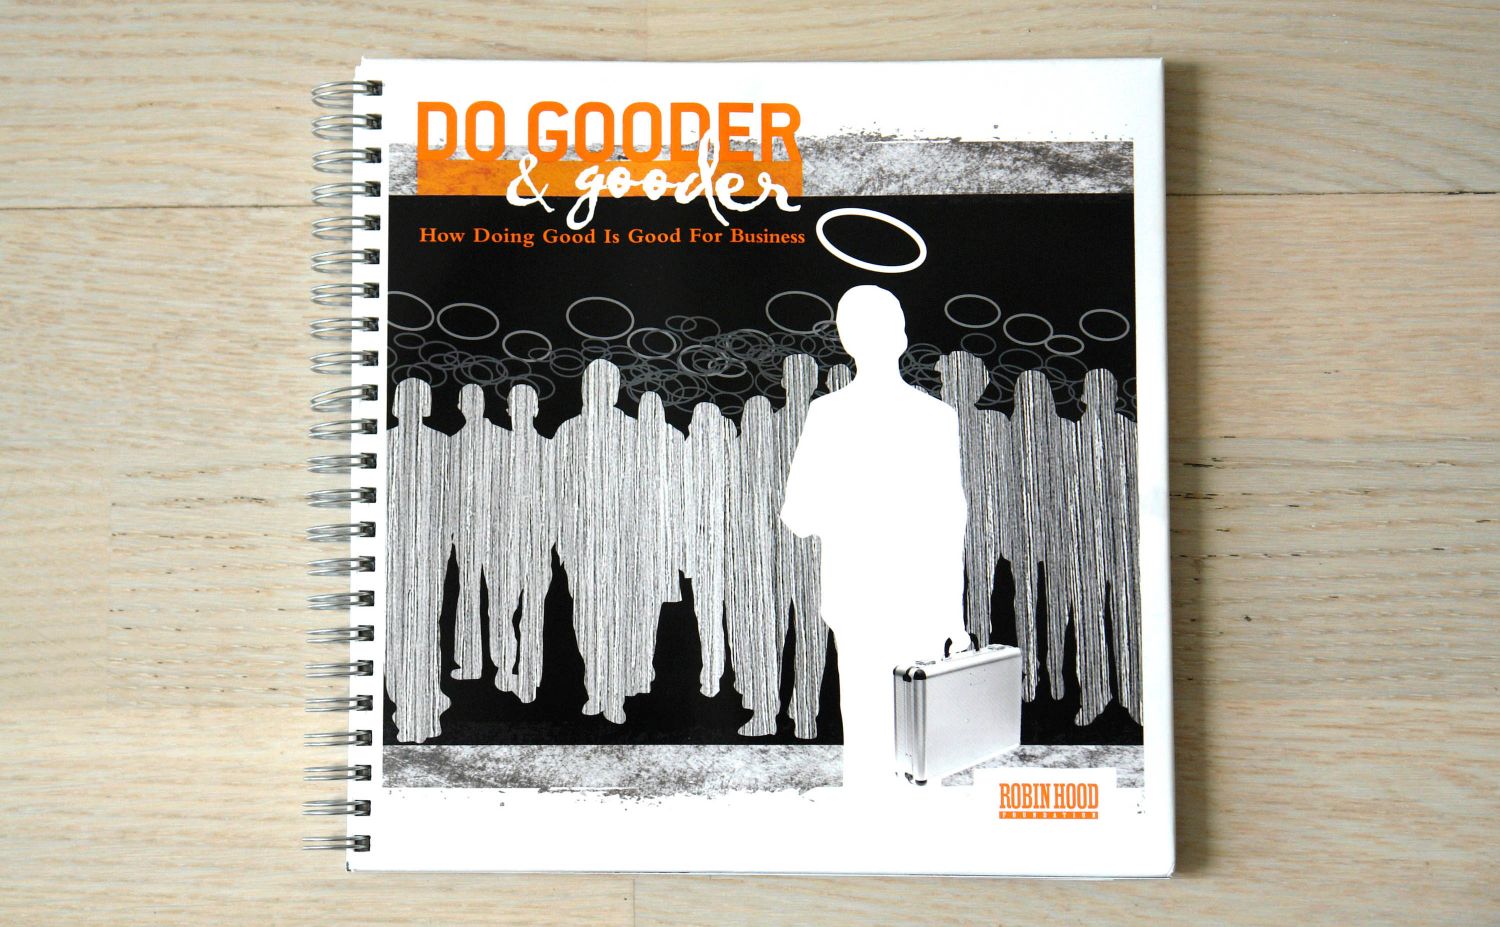 Robin Hood Foundation - Do Gooders Book - Cover